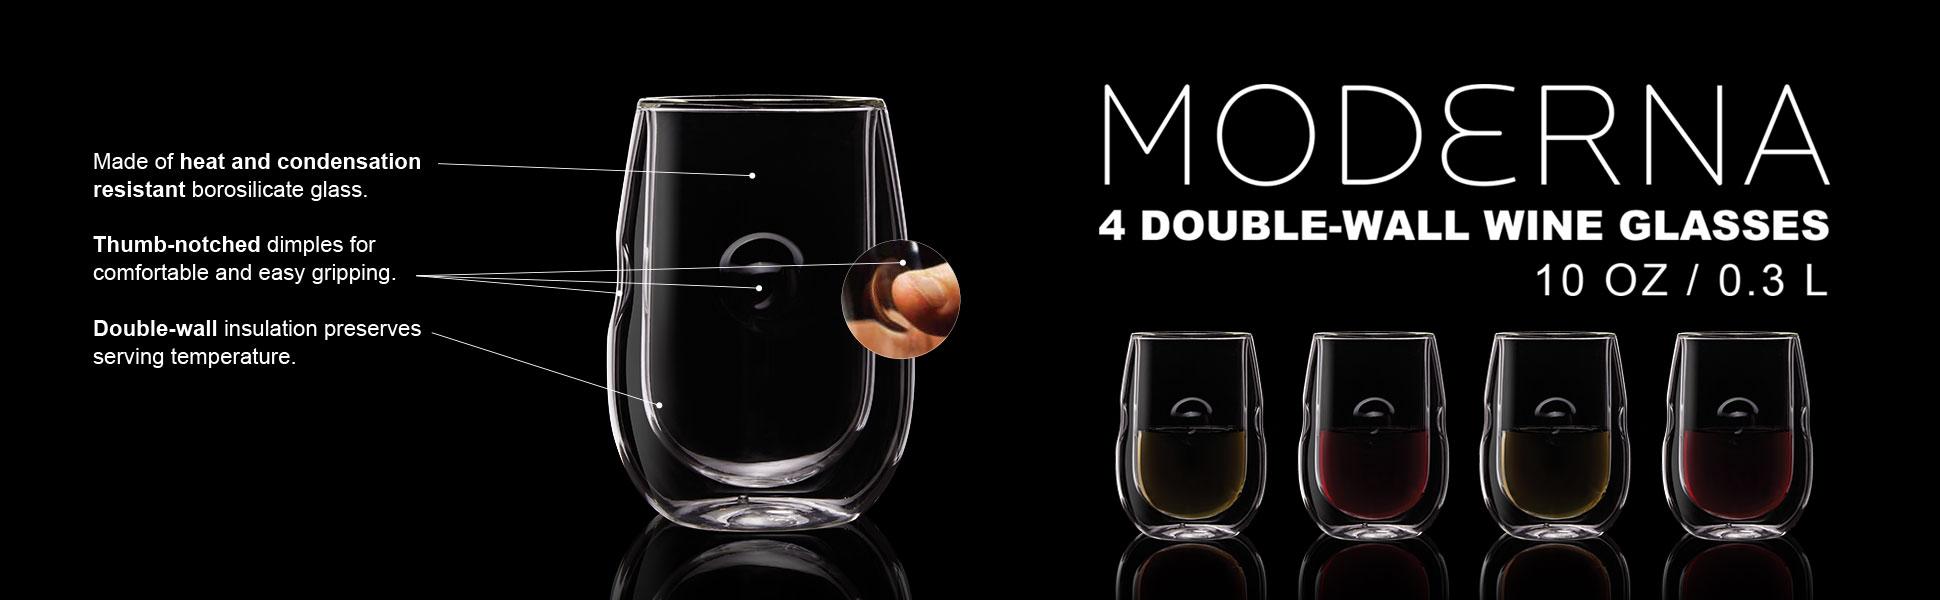 Ozeri 12 oz Serafino Double Wall Beverage & Coffee Glasses - Set of 4 Insulated Drinking Glasses